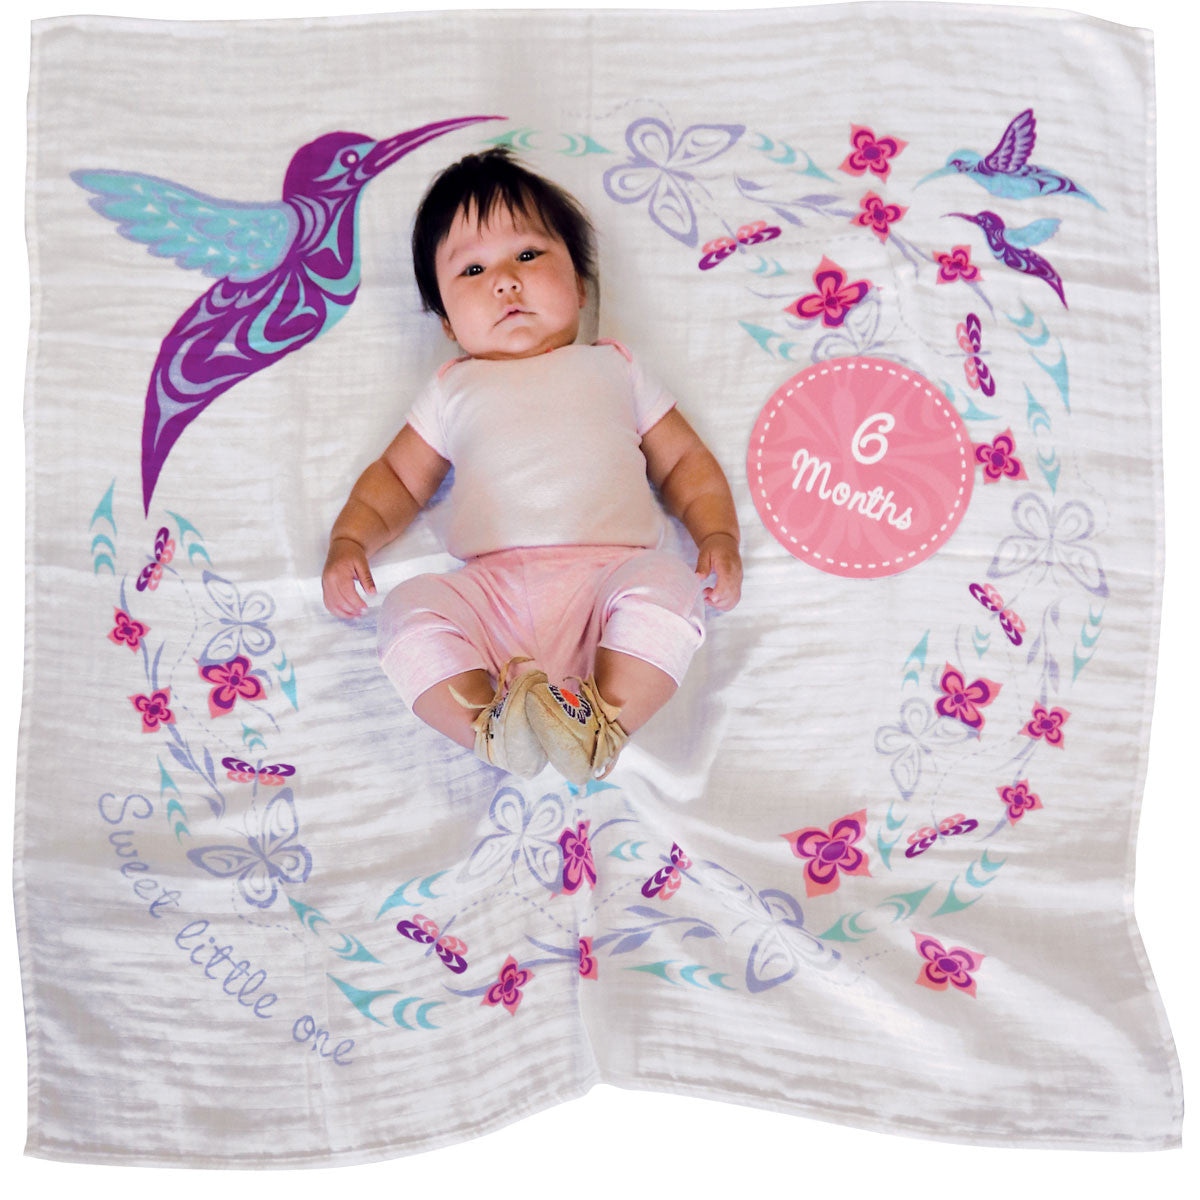 Baby Blanket and Milestone Sets- "Hummingbird" by Simone Diamond